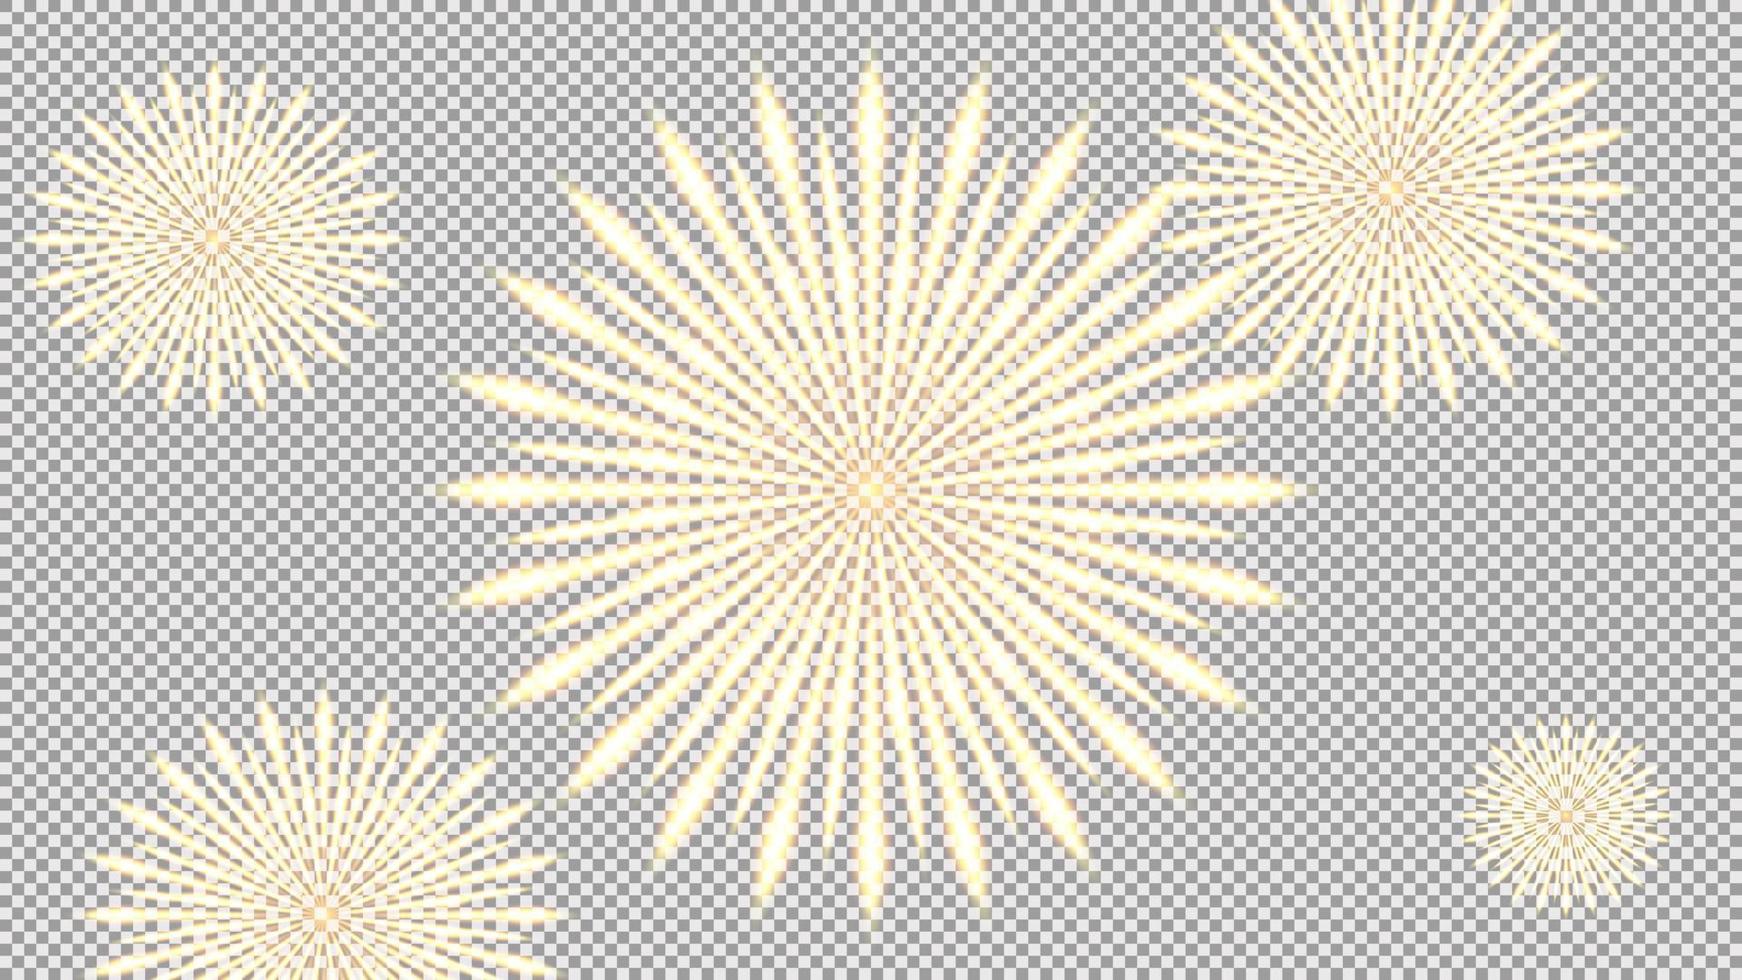 Firework Vector Illustration. Abstract Firework Isolated Illustration. Firework vector illustration